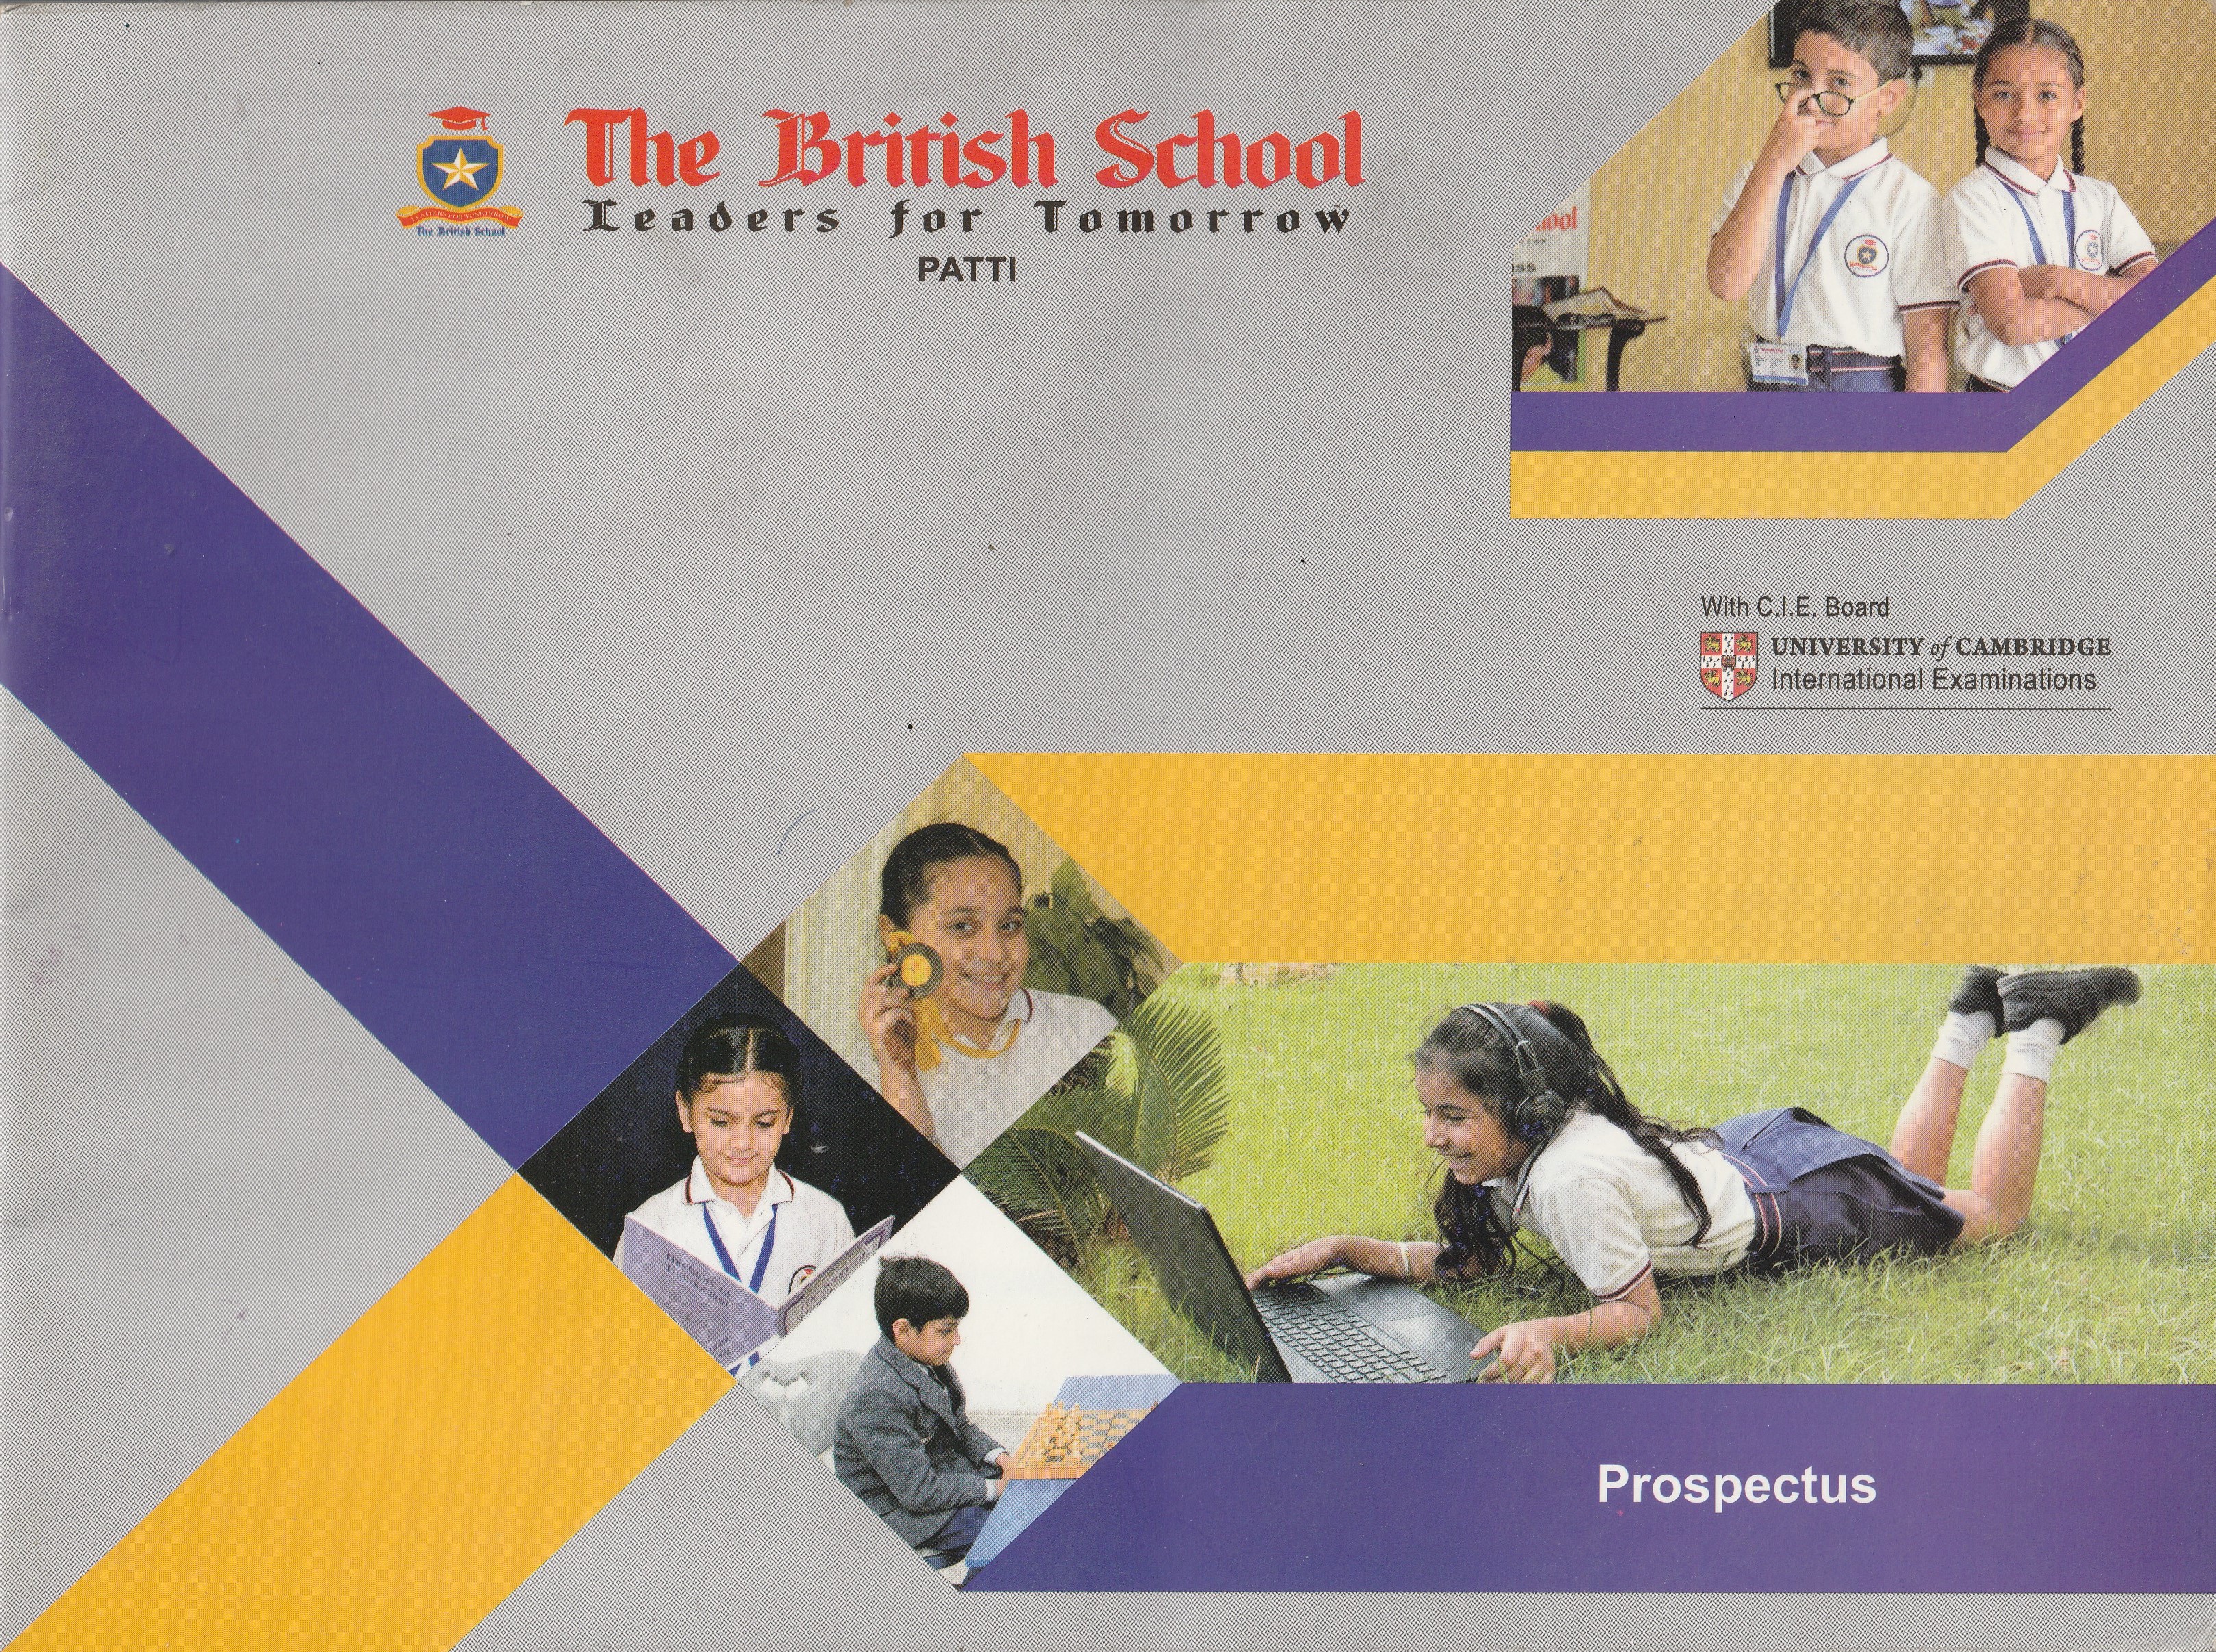 THE BRITISH SCHOOL